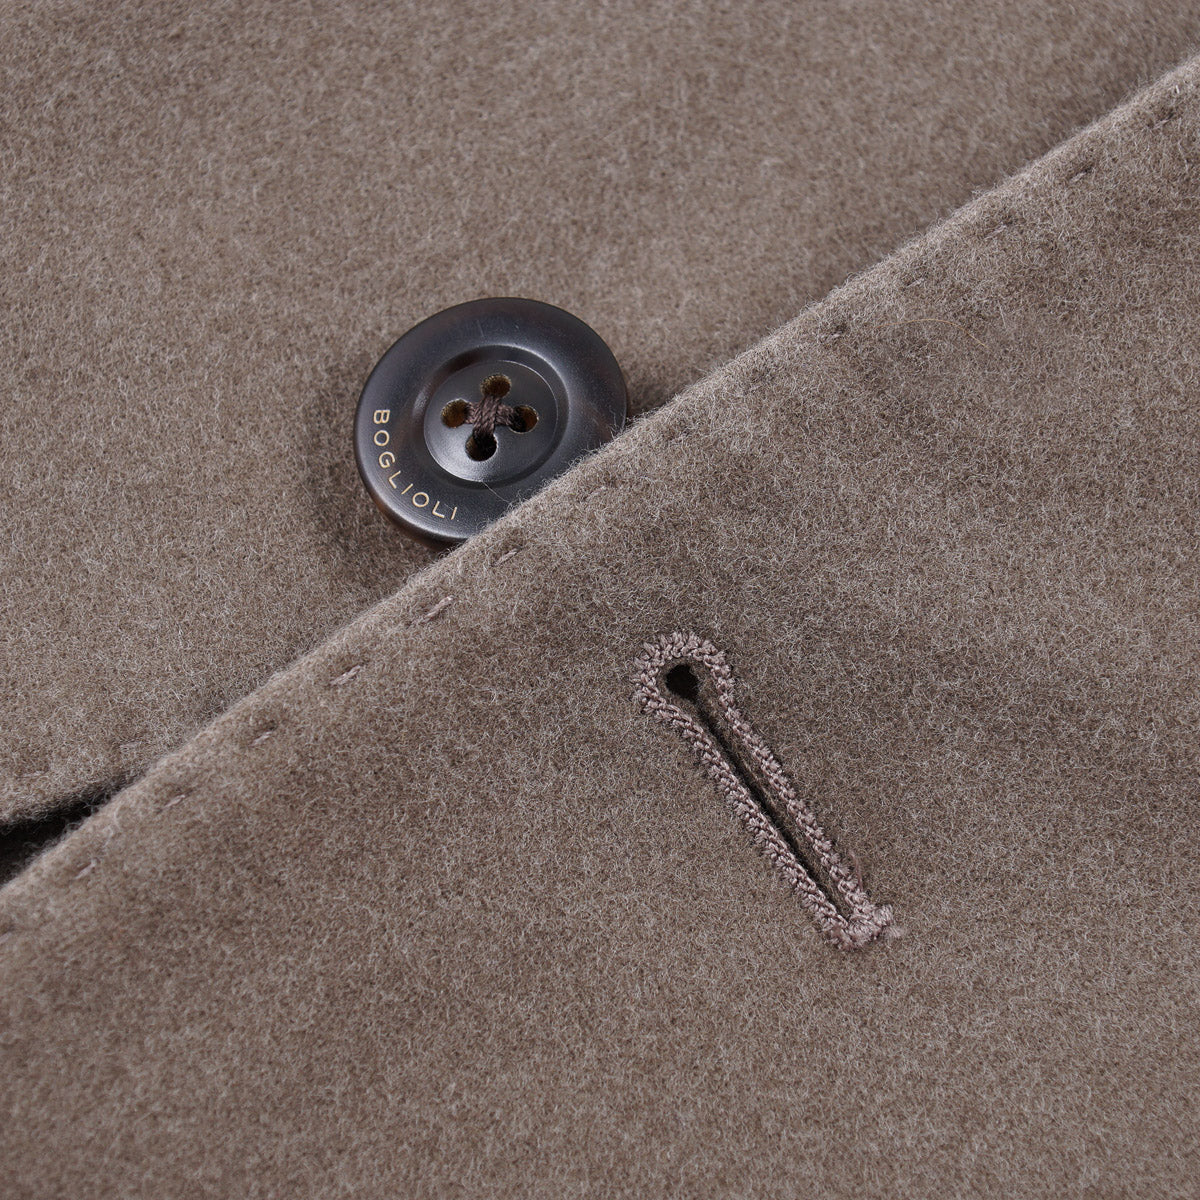 Boglioli Soft Flannel Wool K-Jacket - Top Shelf Apparel